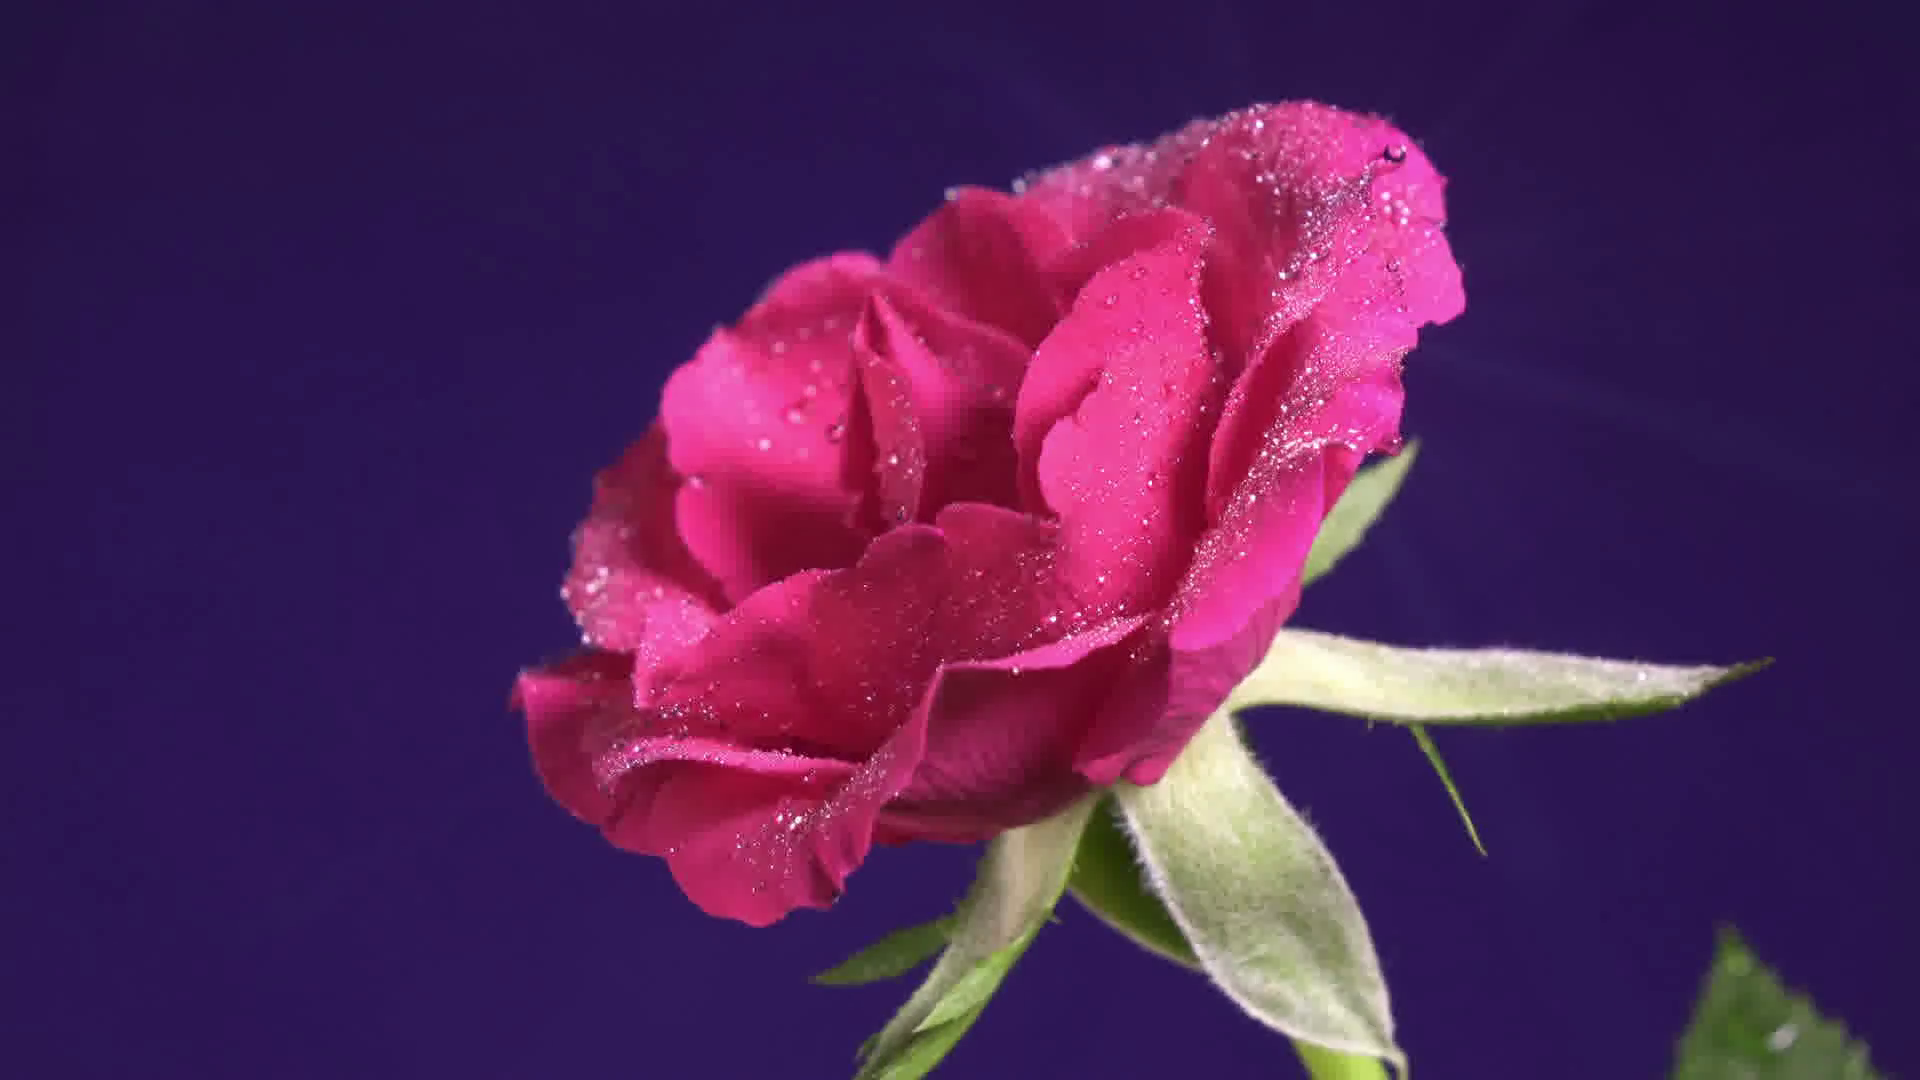 Rose flower in the rain, drops of water shining as diamonds, close ...